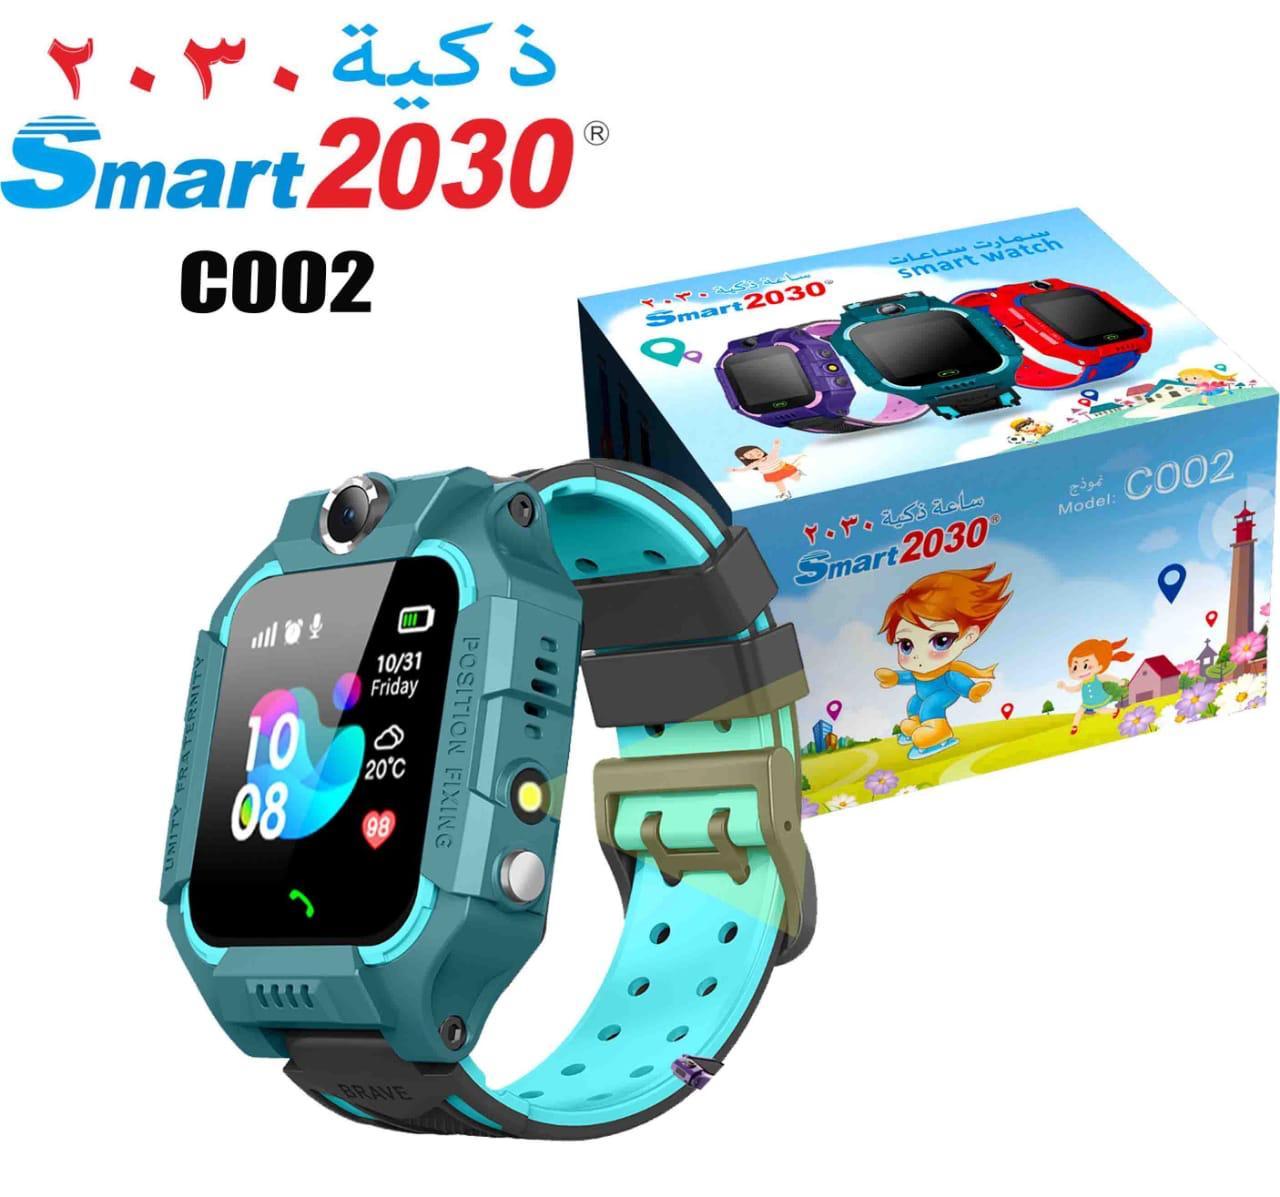 SmartWatch Enfants Smart 2030 GPS C002